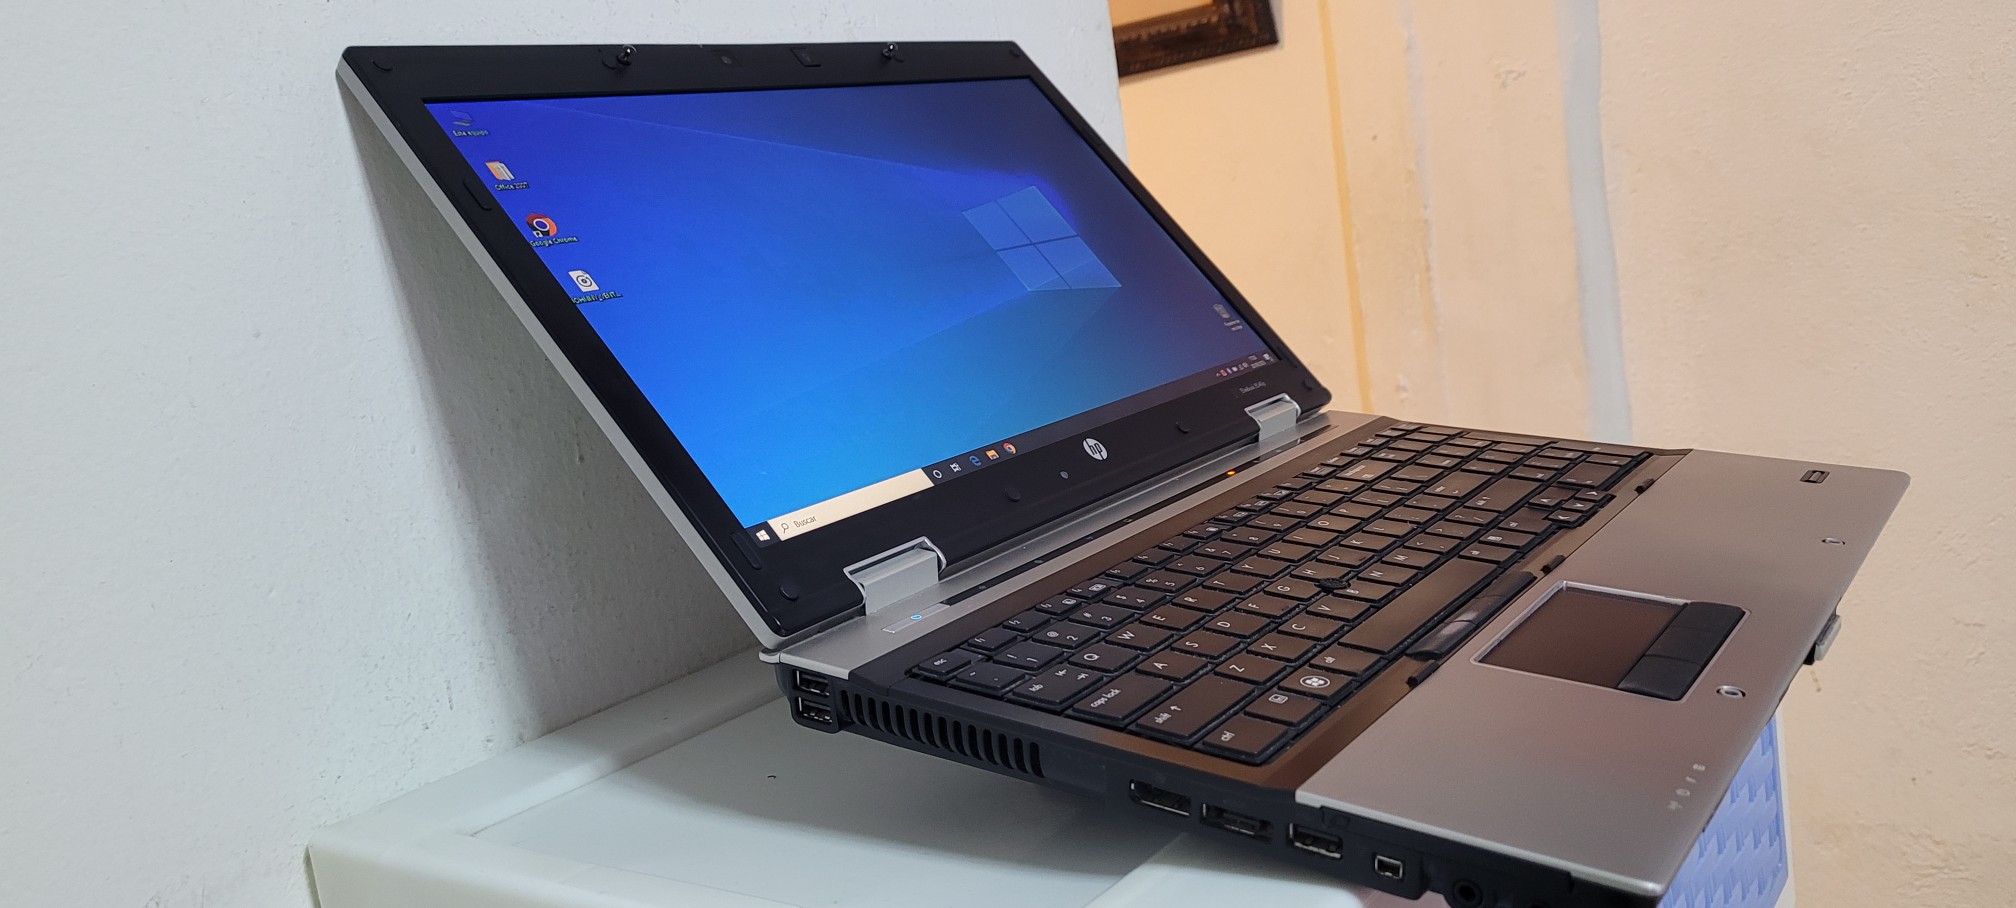 computadoras y laptops - Laptop hp 17 Pulg Core i7 Ram 8gb SSD 128GB Nvidea 1gb Dedicada 1